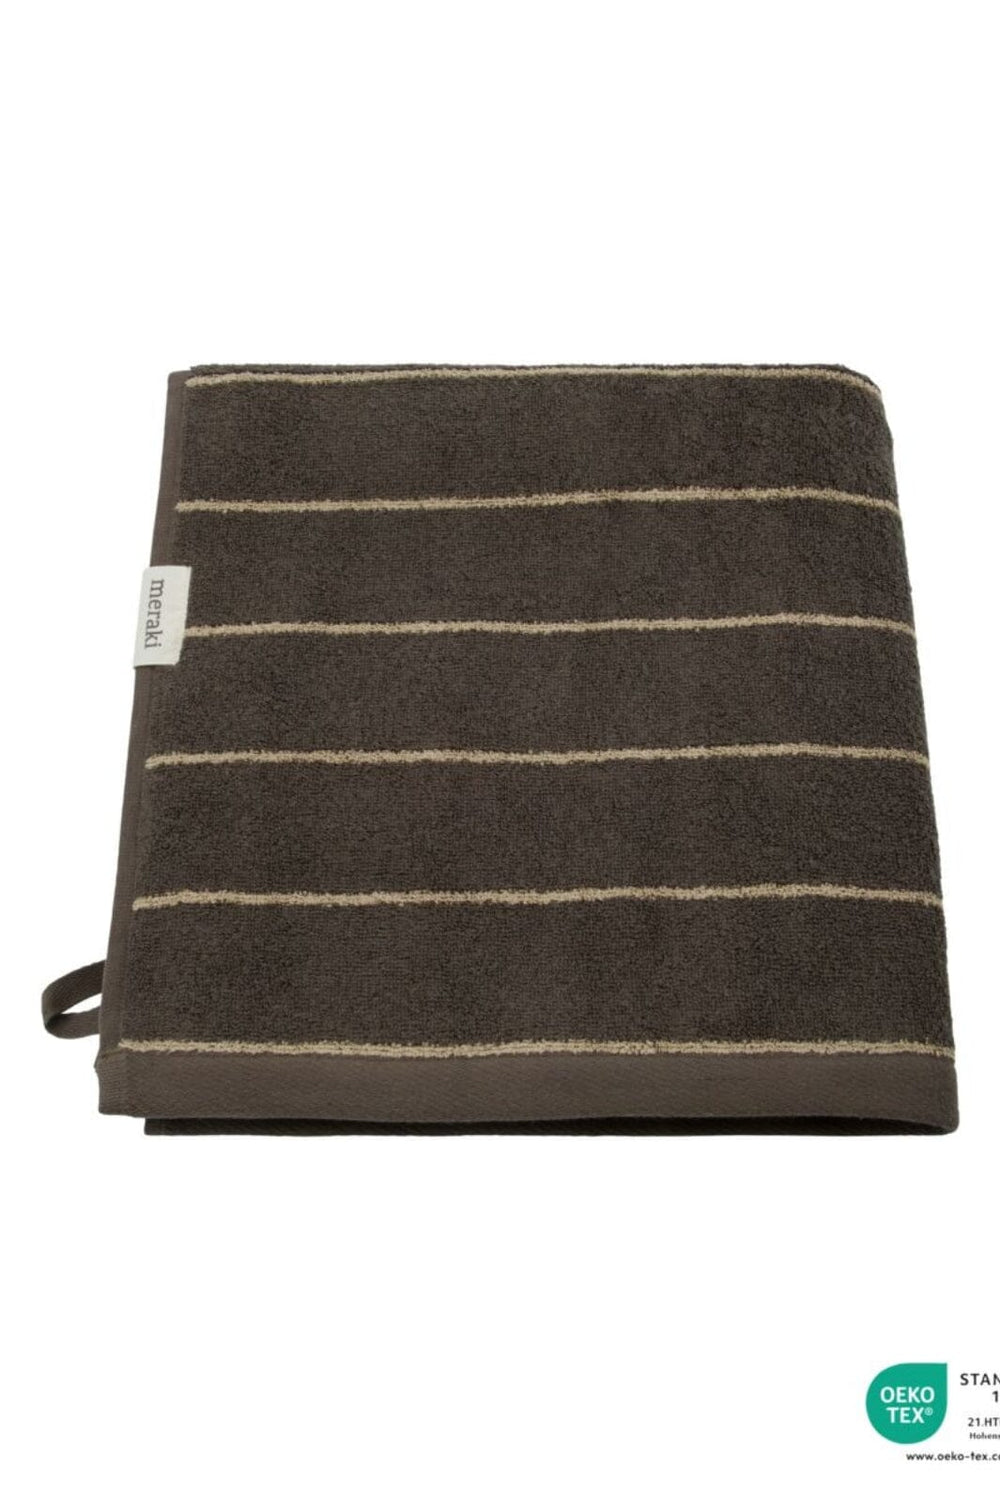 Meraki - Håndklæde, Stripe, 70 x 140, Army Håndklæder 